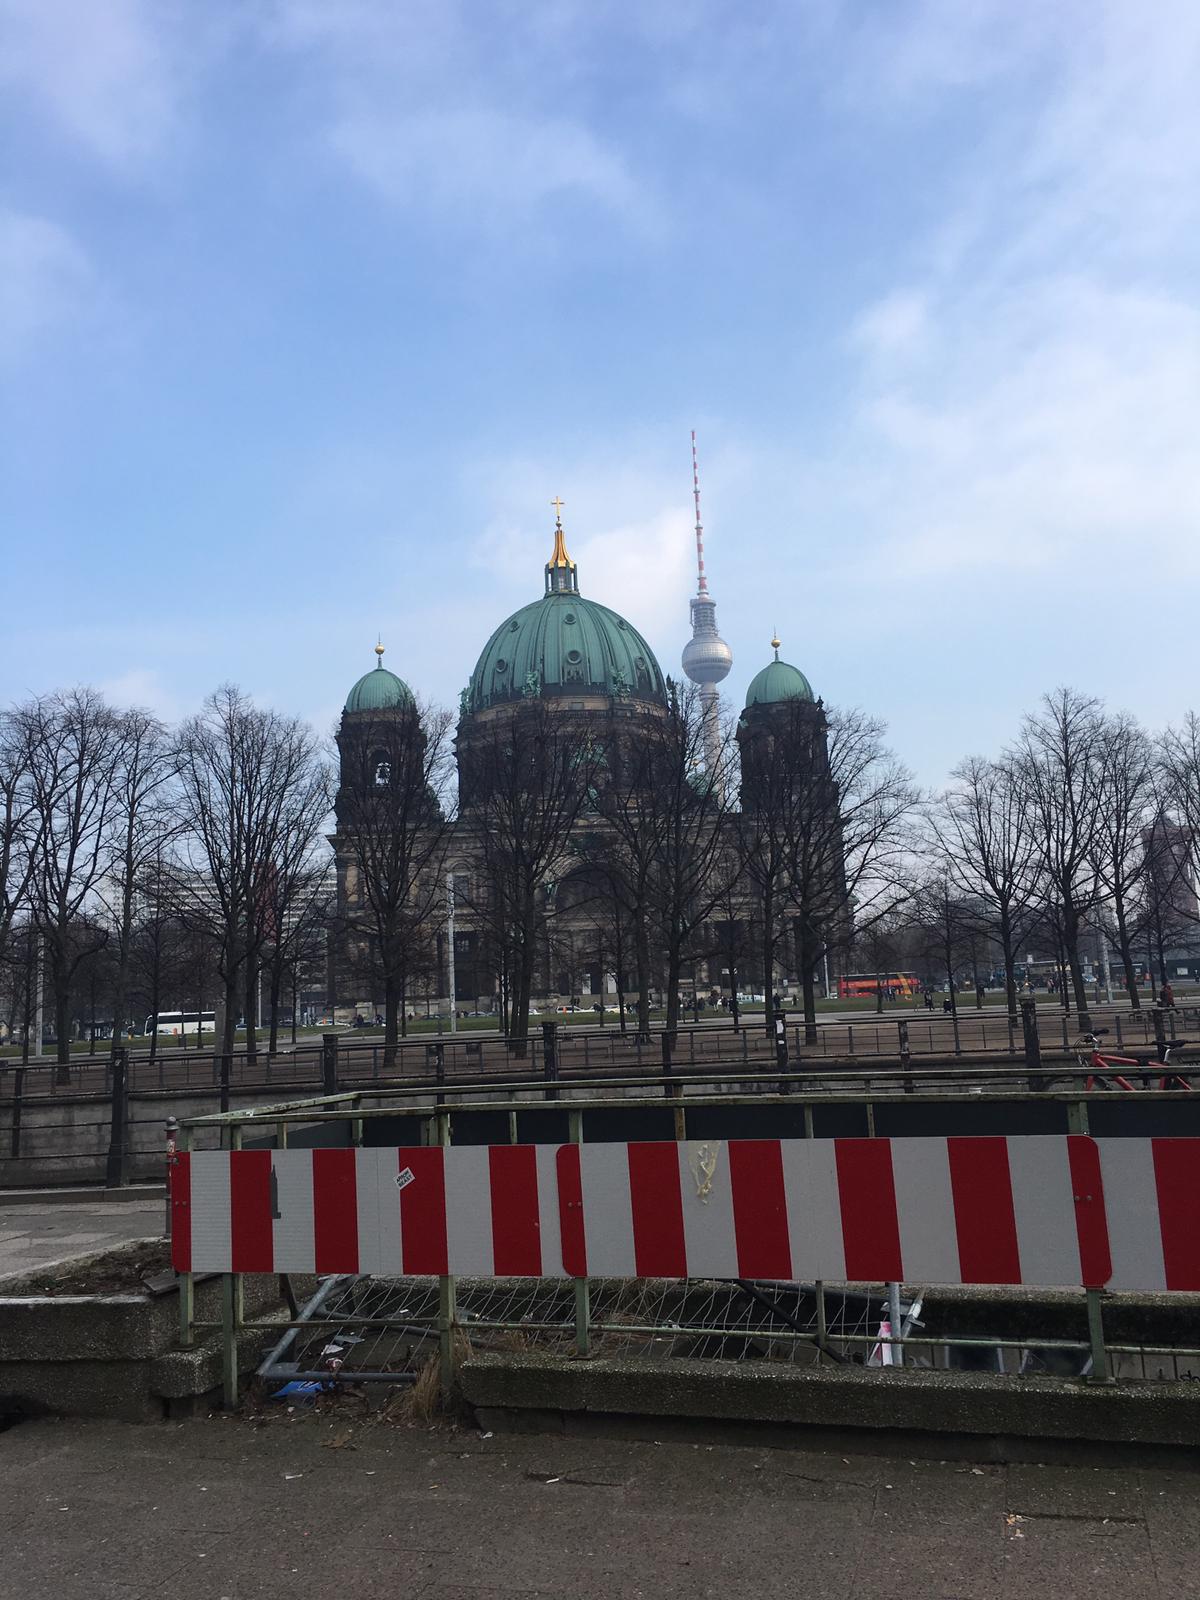 gcse history berlin trip feb 18